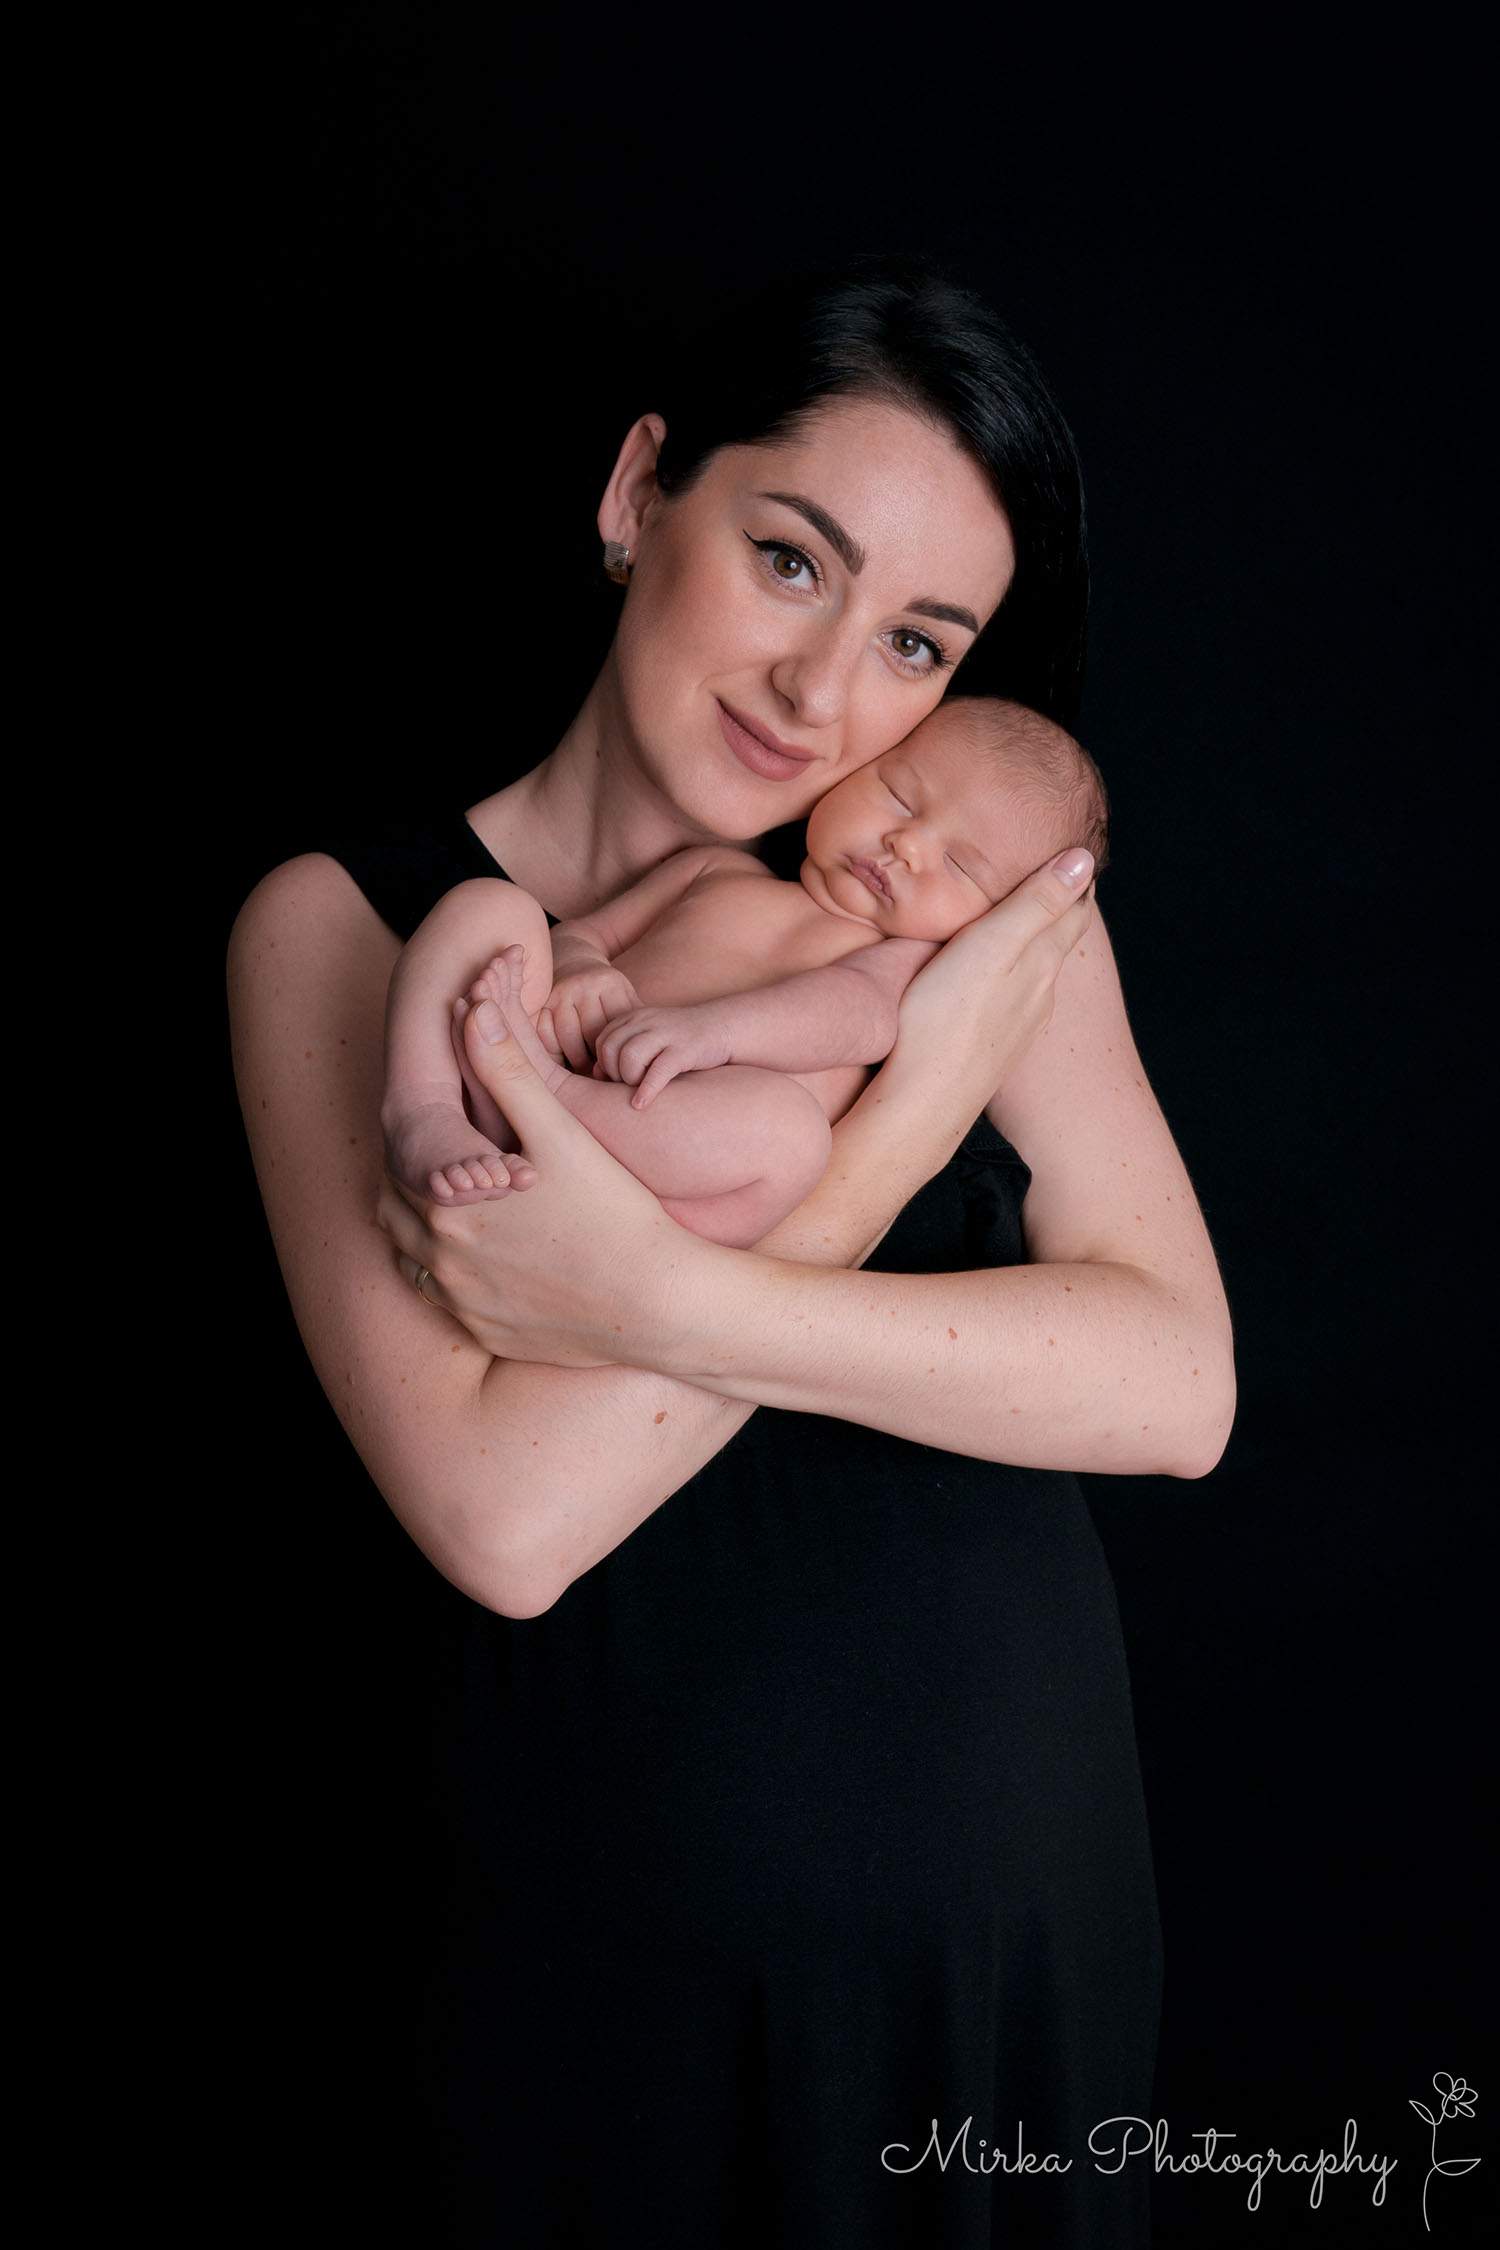 Mama mit baby im arm